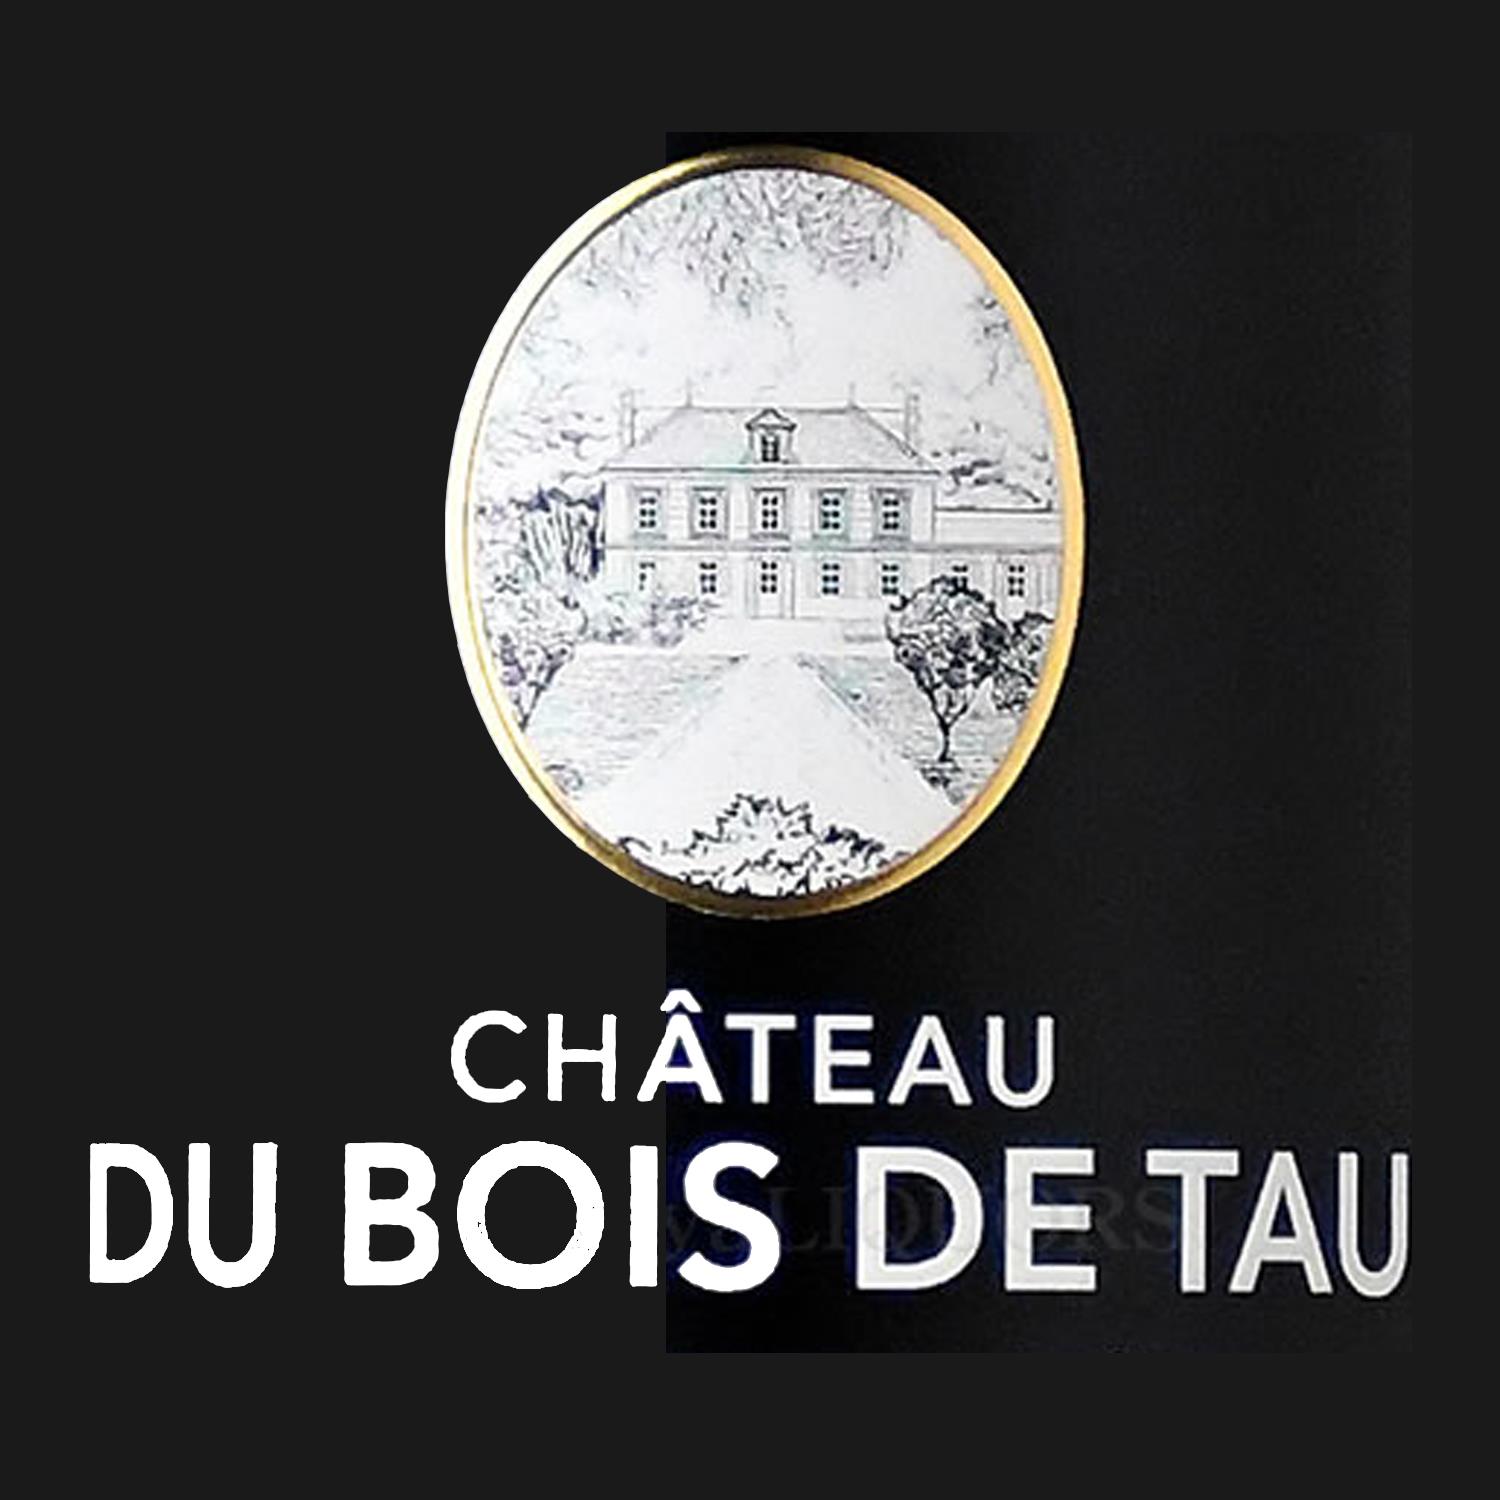 桃木城堡 Château du bois de tau